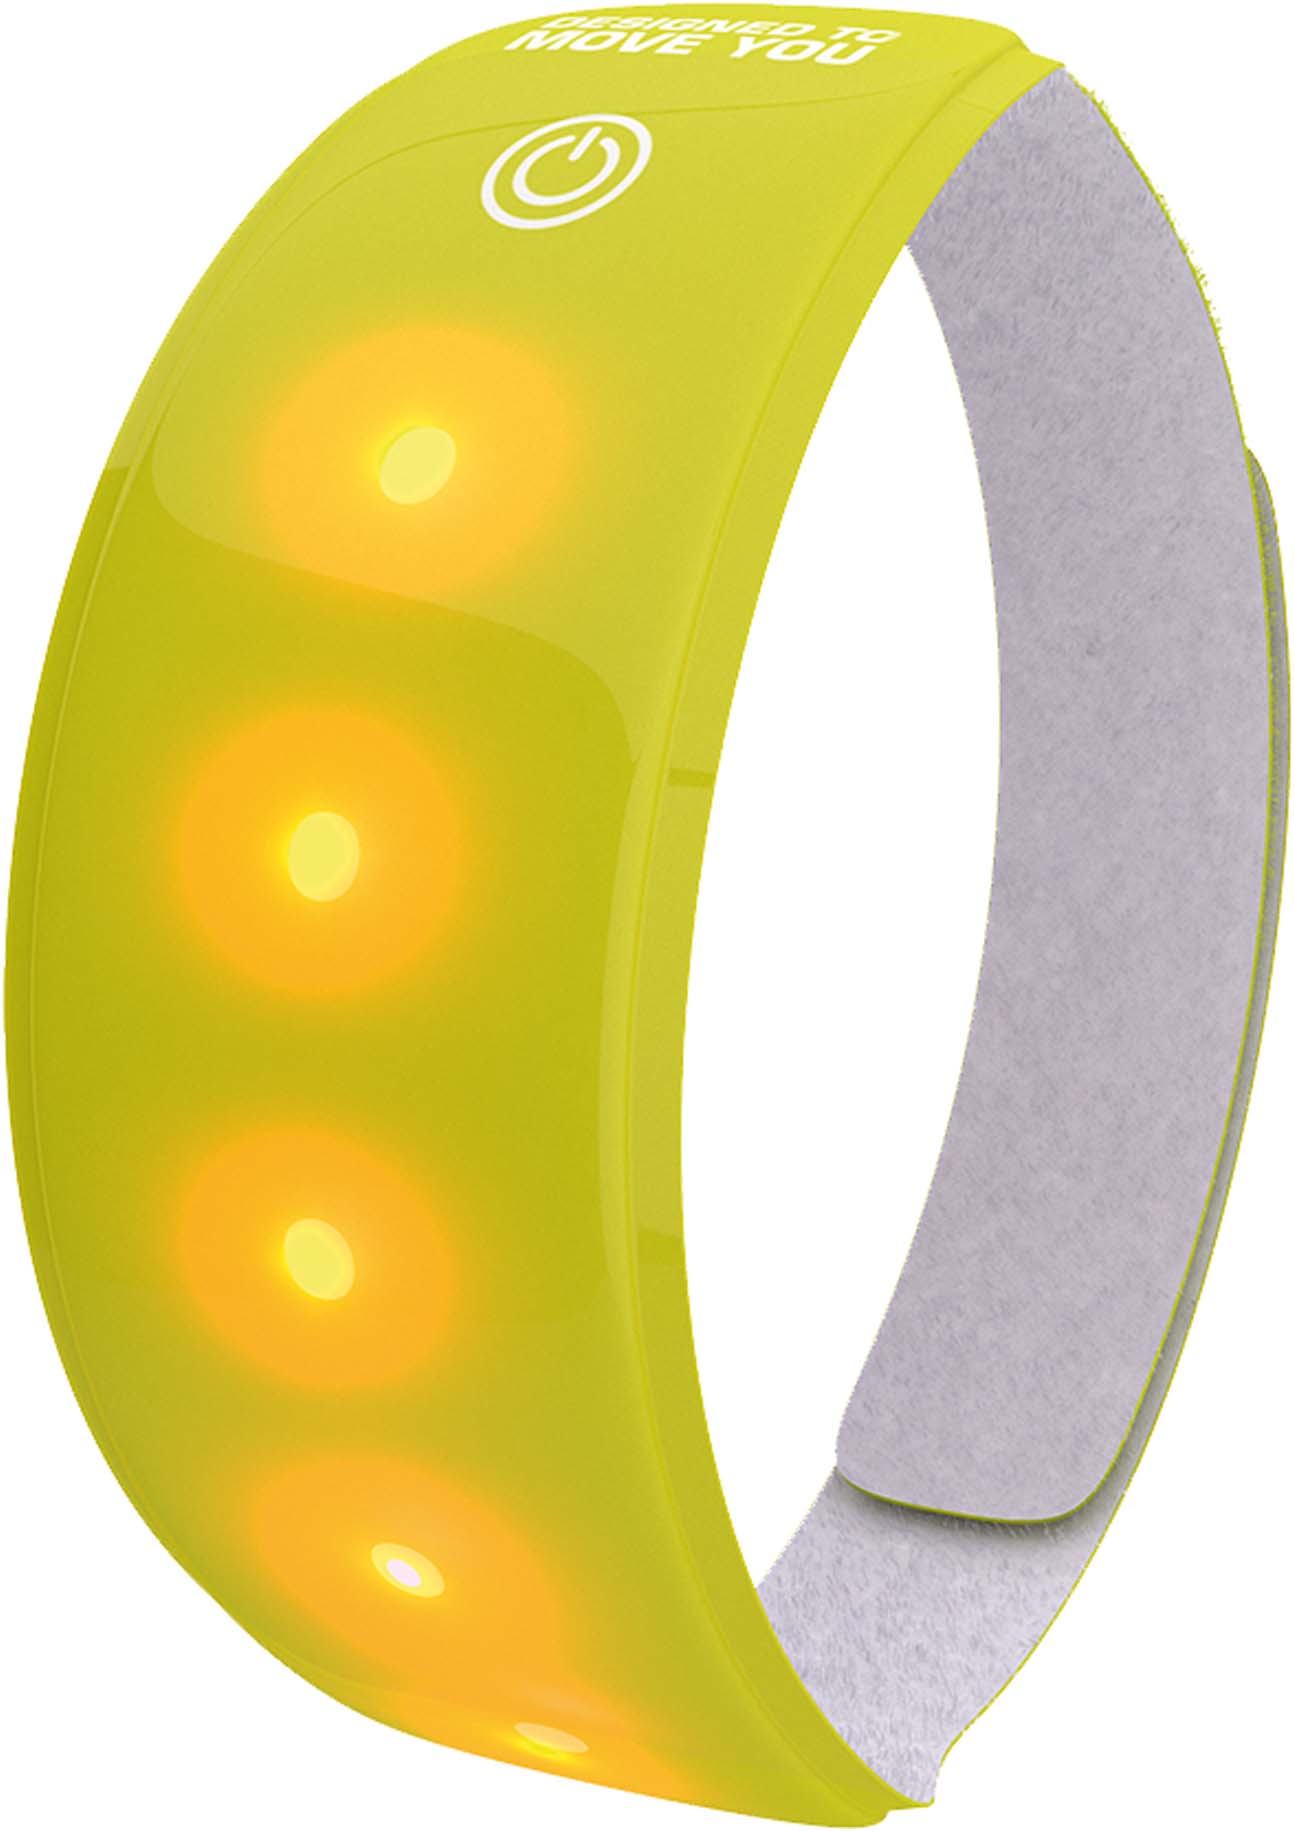 WOWOW LED reflective bracelet Lightband yellow size XL